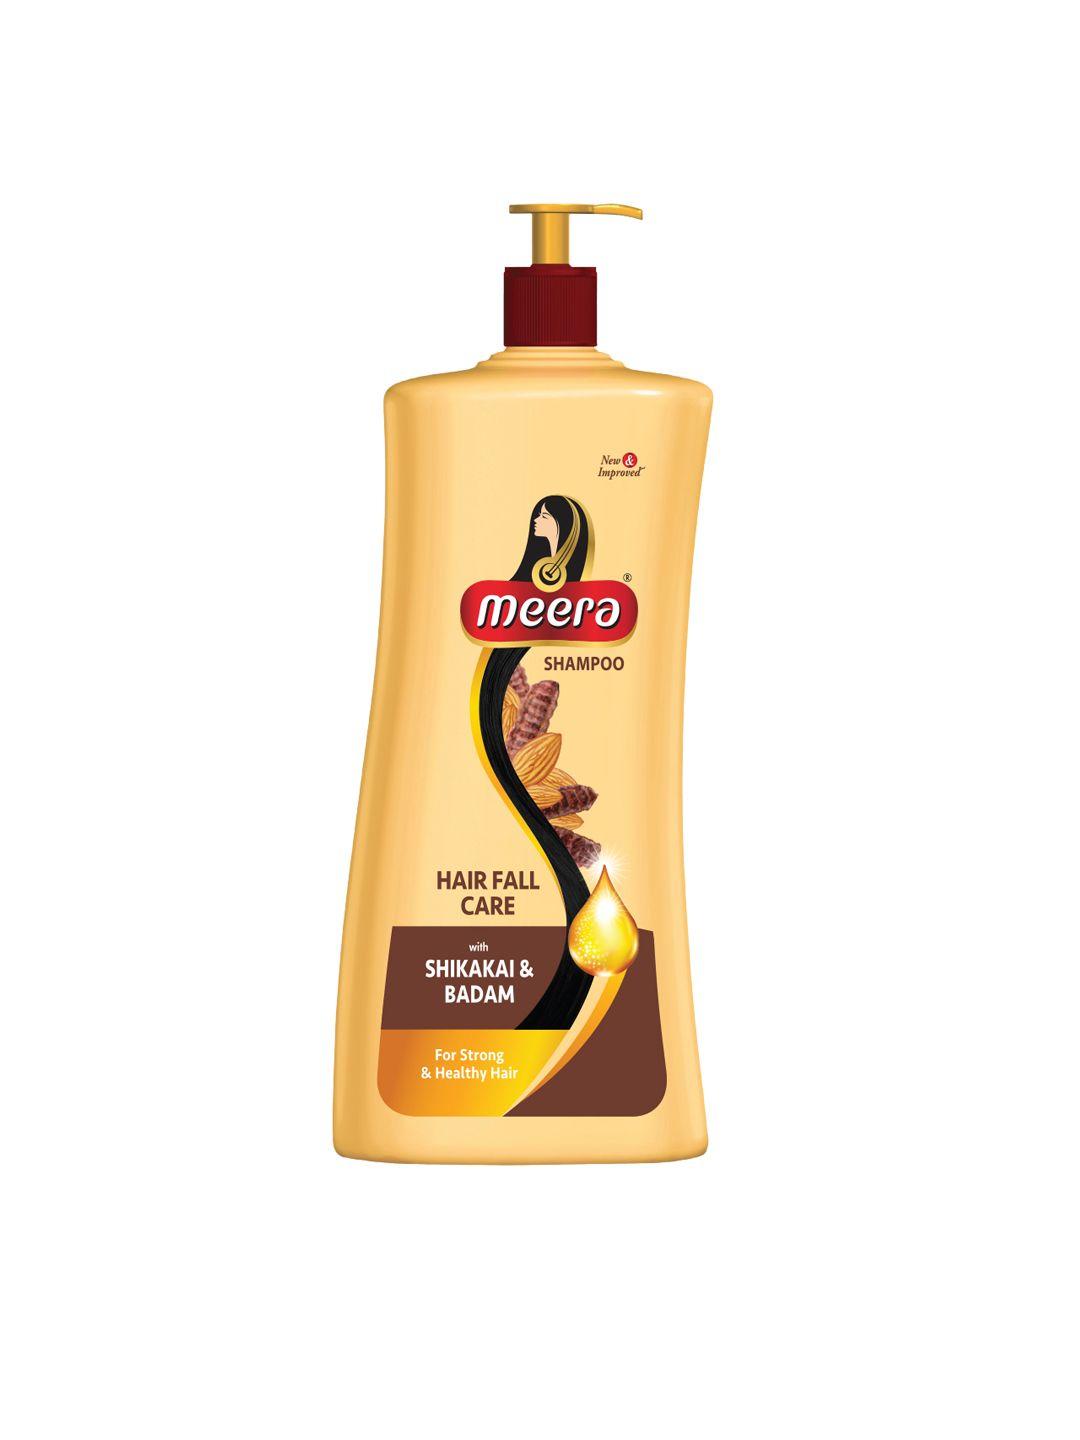 meera goodness of tradition hairfall care shampoo with shikakai & badam 340 ml